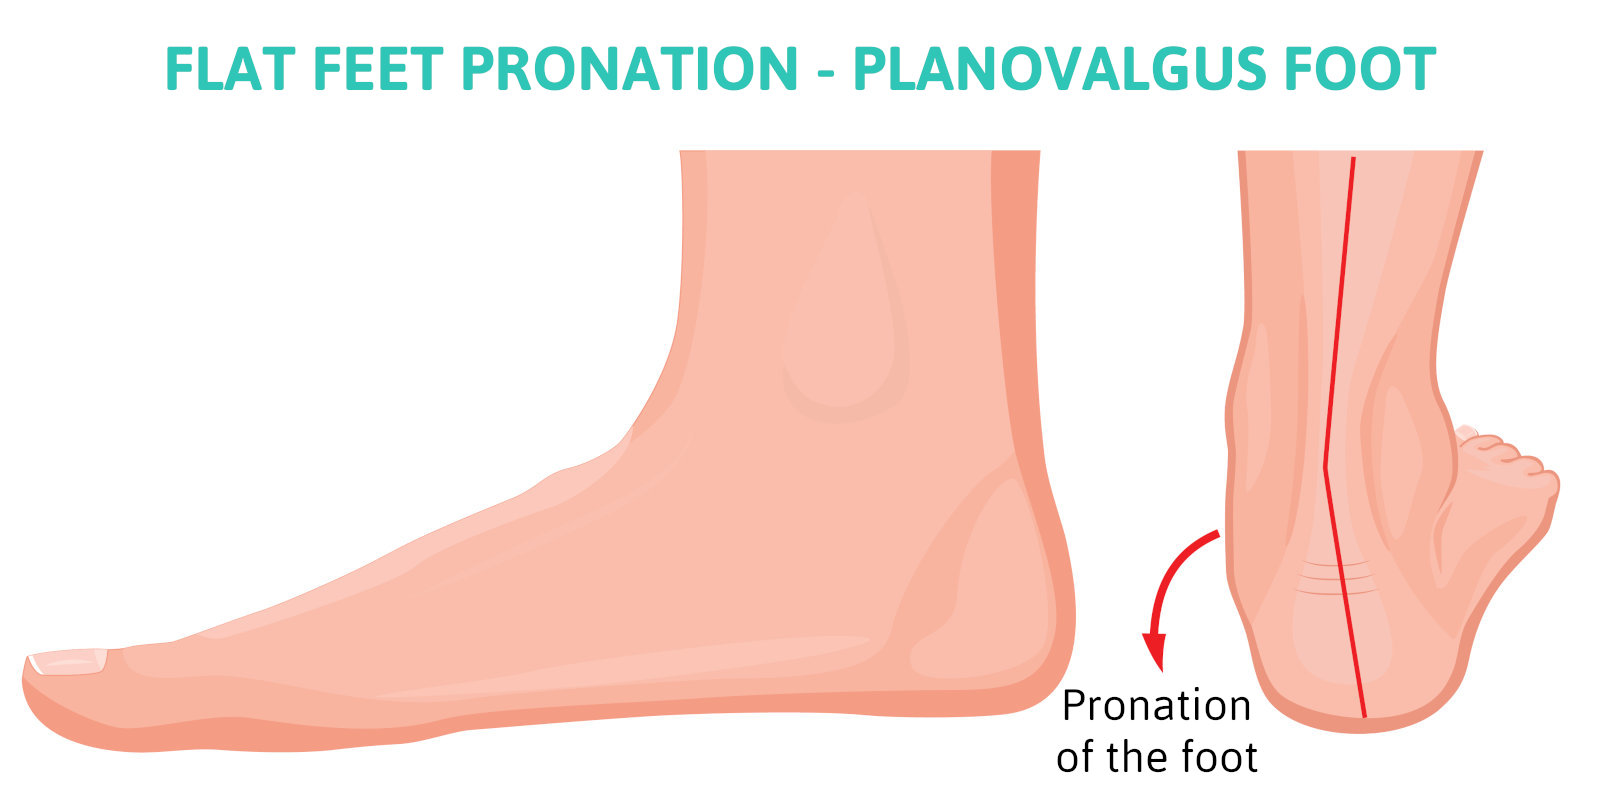 Flat Feet Pronation - Complications from Overpronation